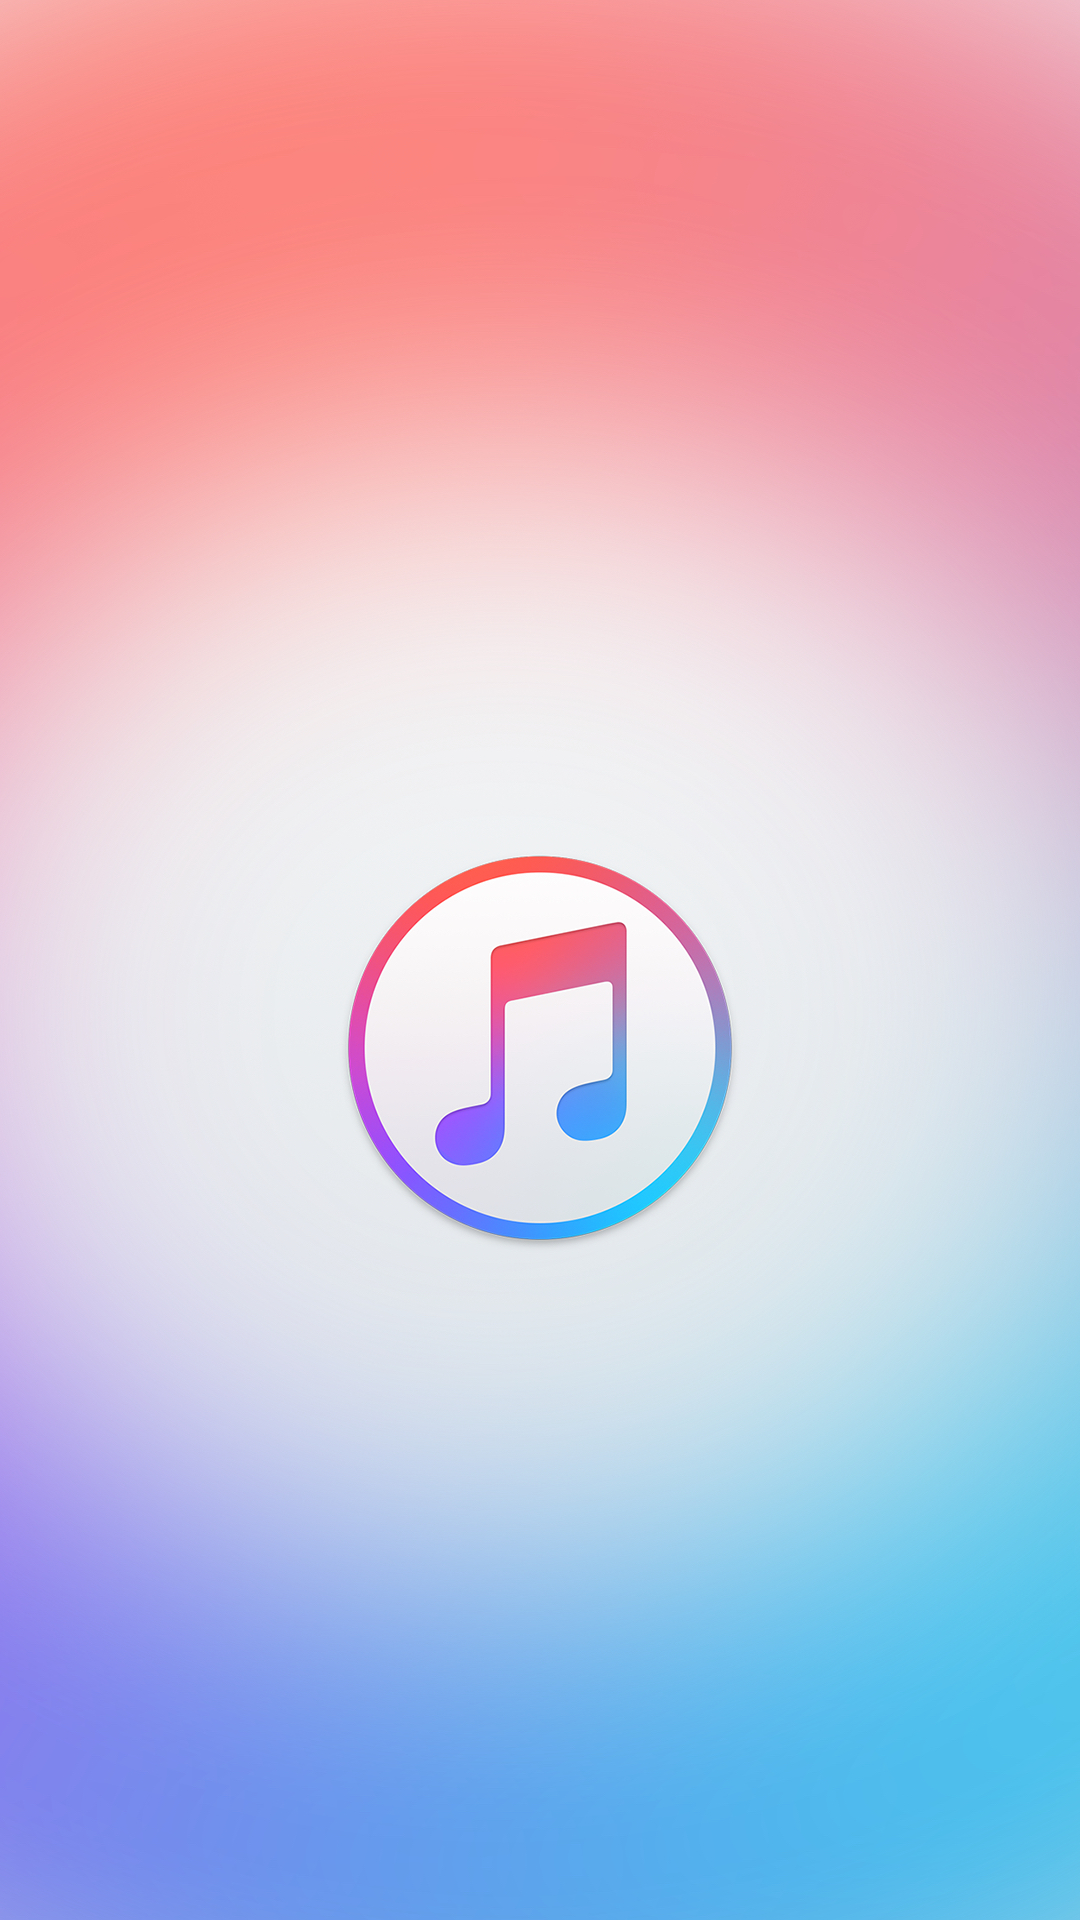 Apple Music wallpaper for iPhone, iPad, and desktop